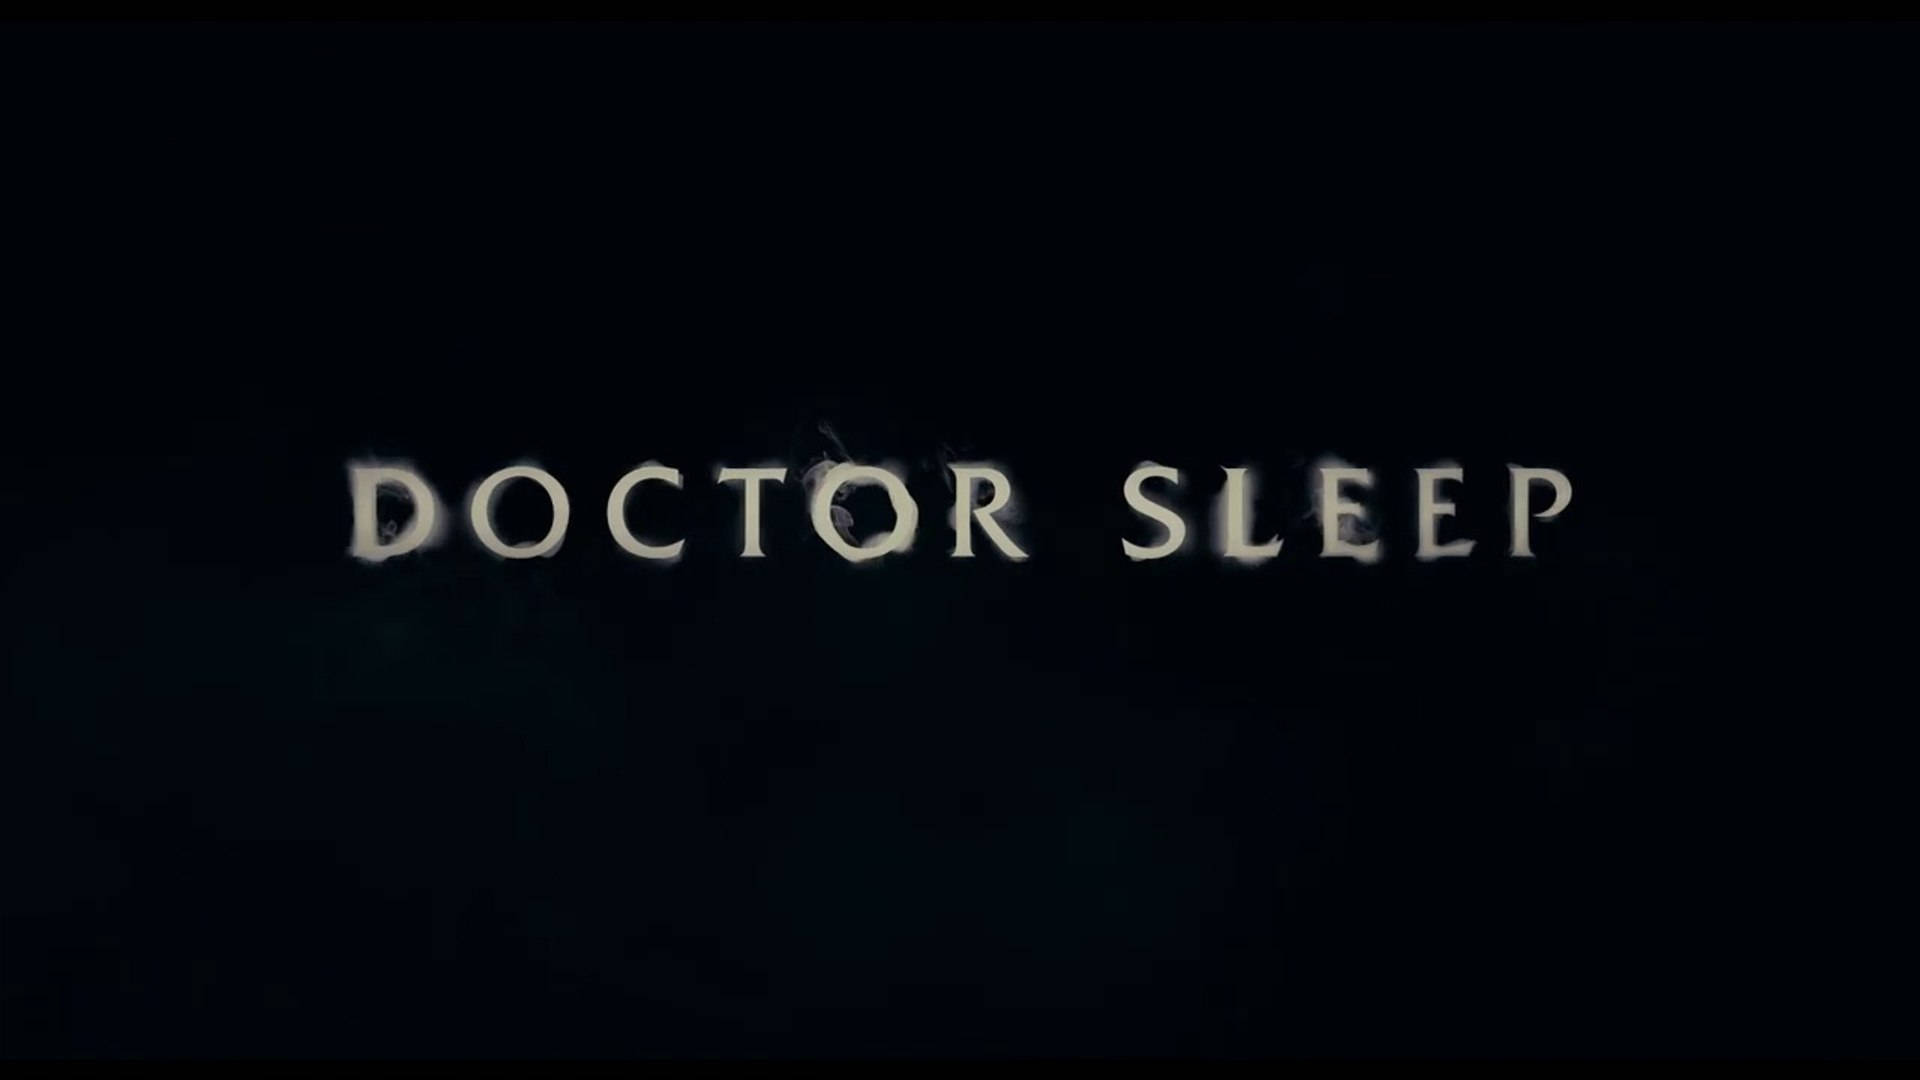 Minimalist Doctor Sleep Poster Background